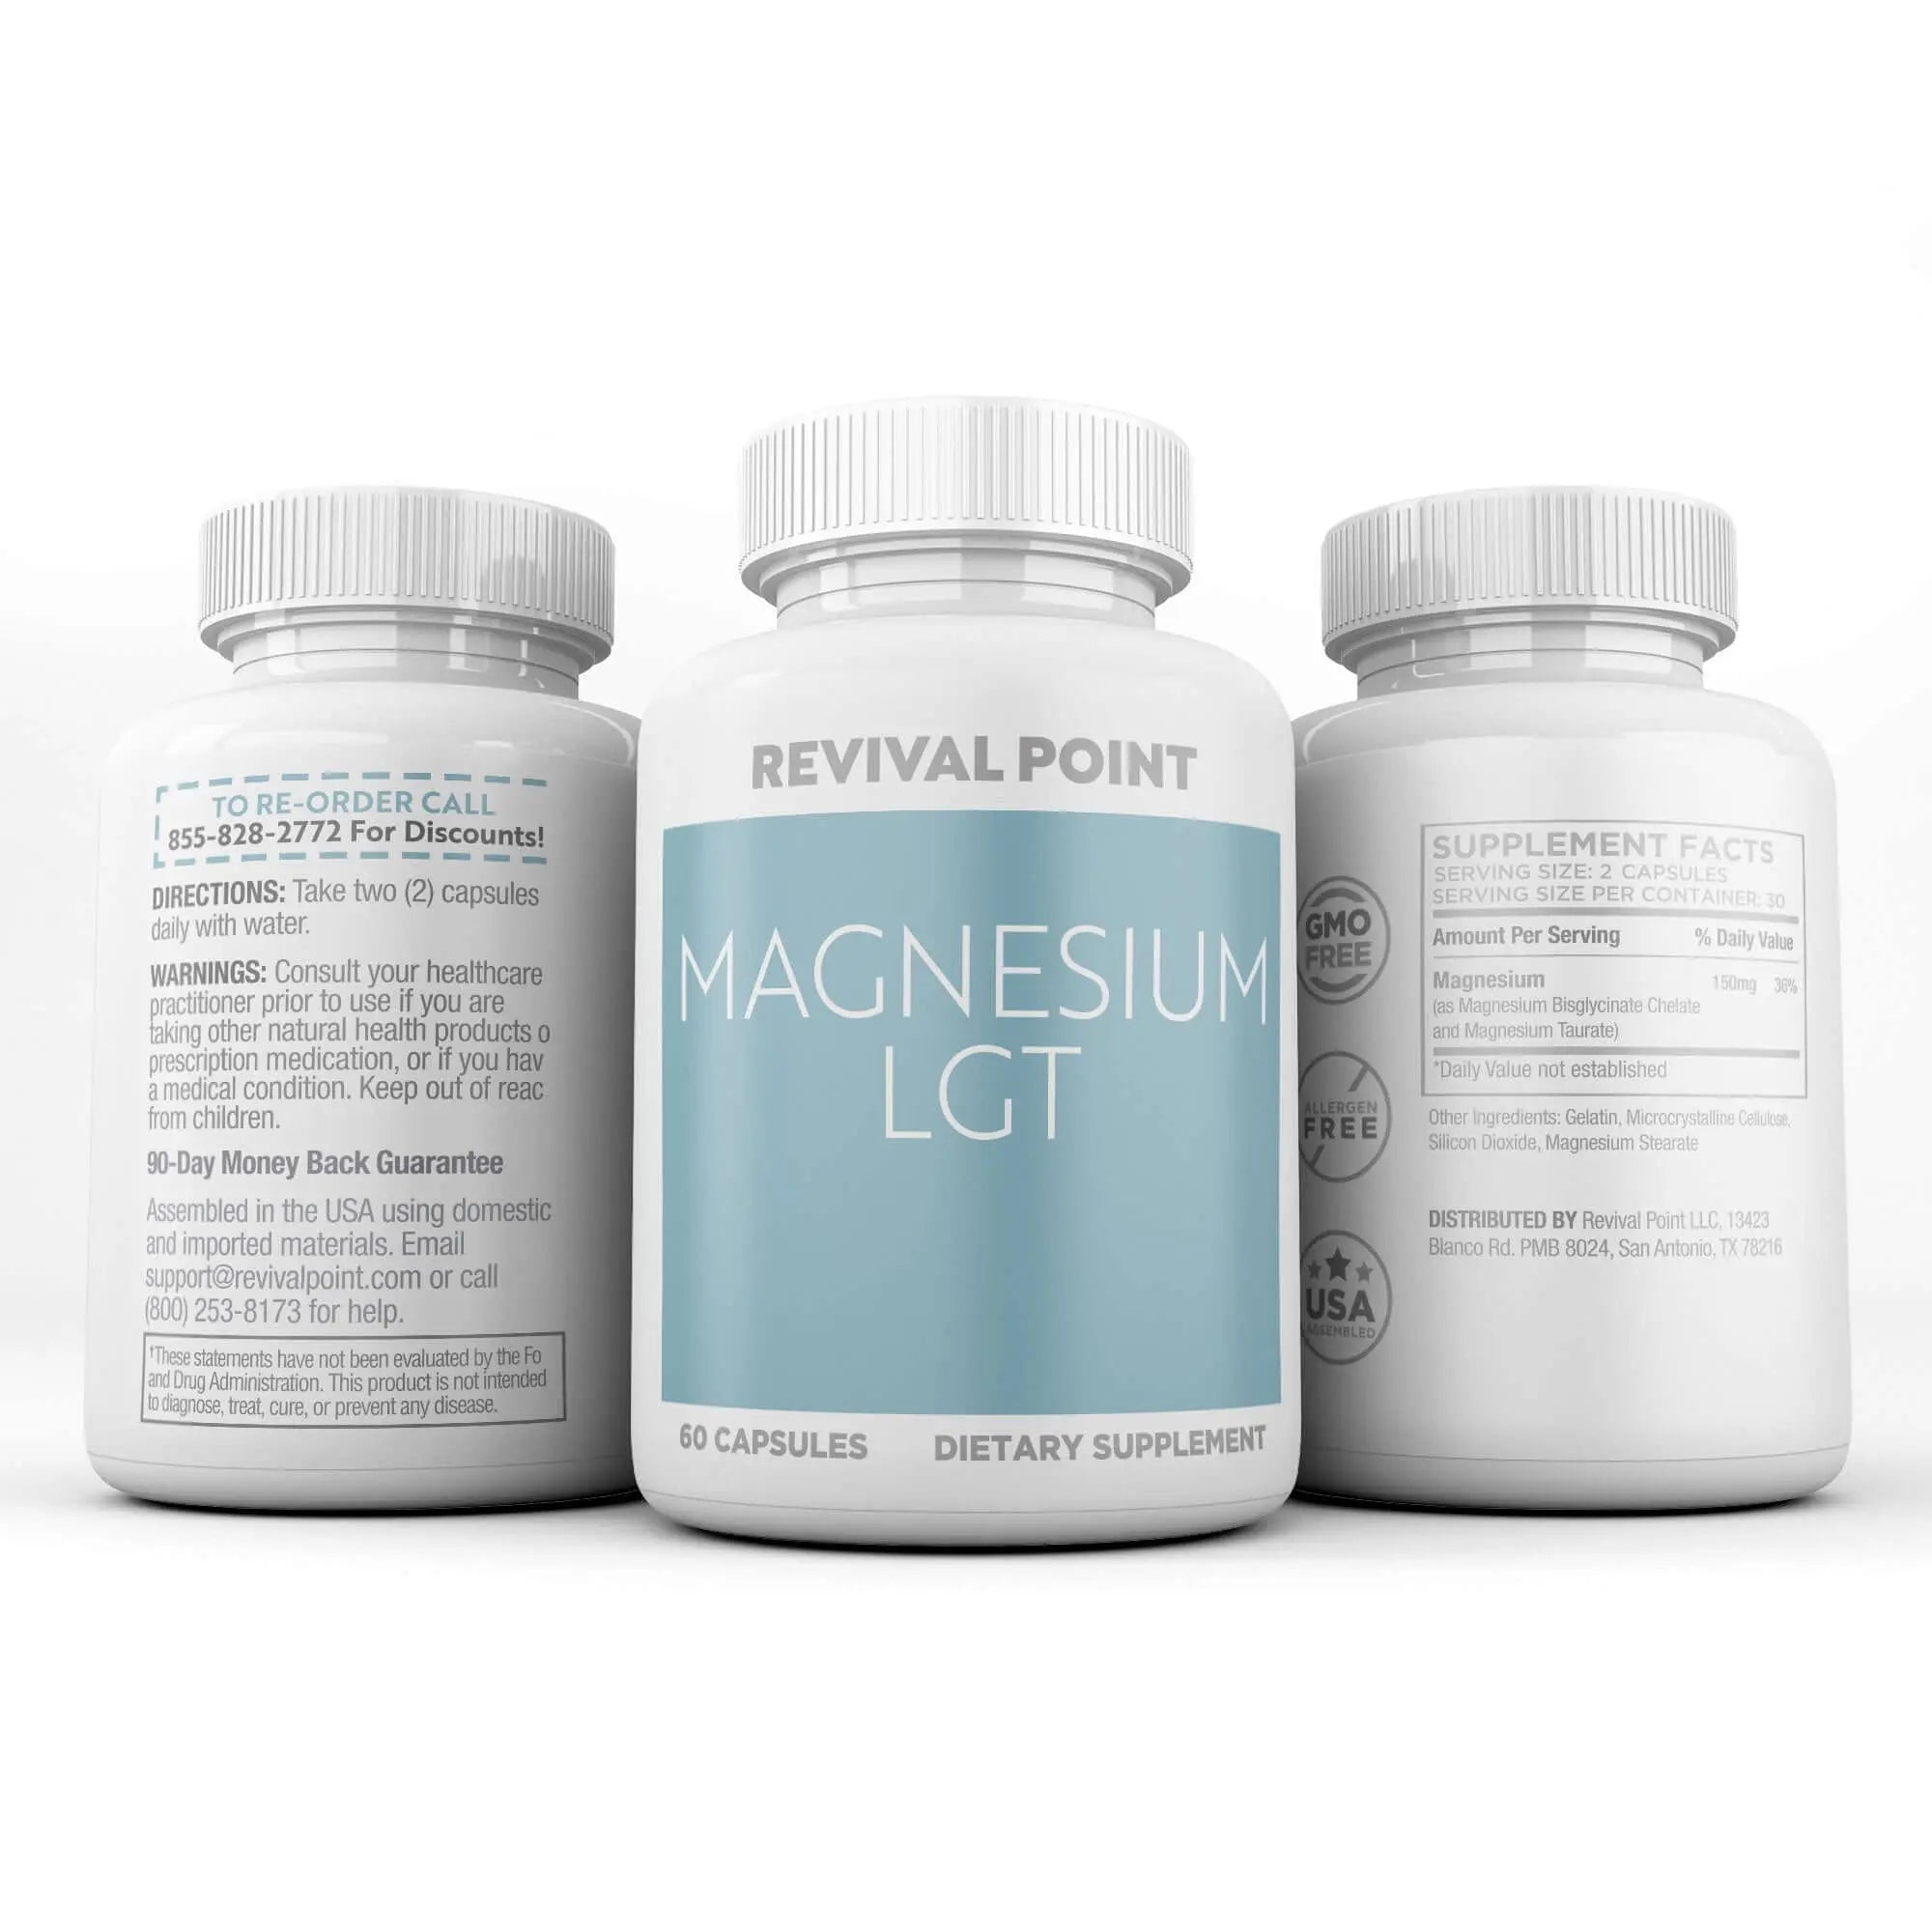 Magnesium Lysinate Glycinate Chelate  150mg Elemental Magnesium Supplement)